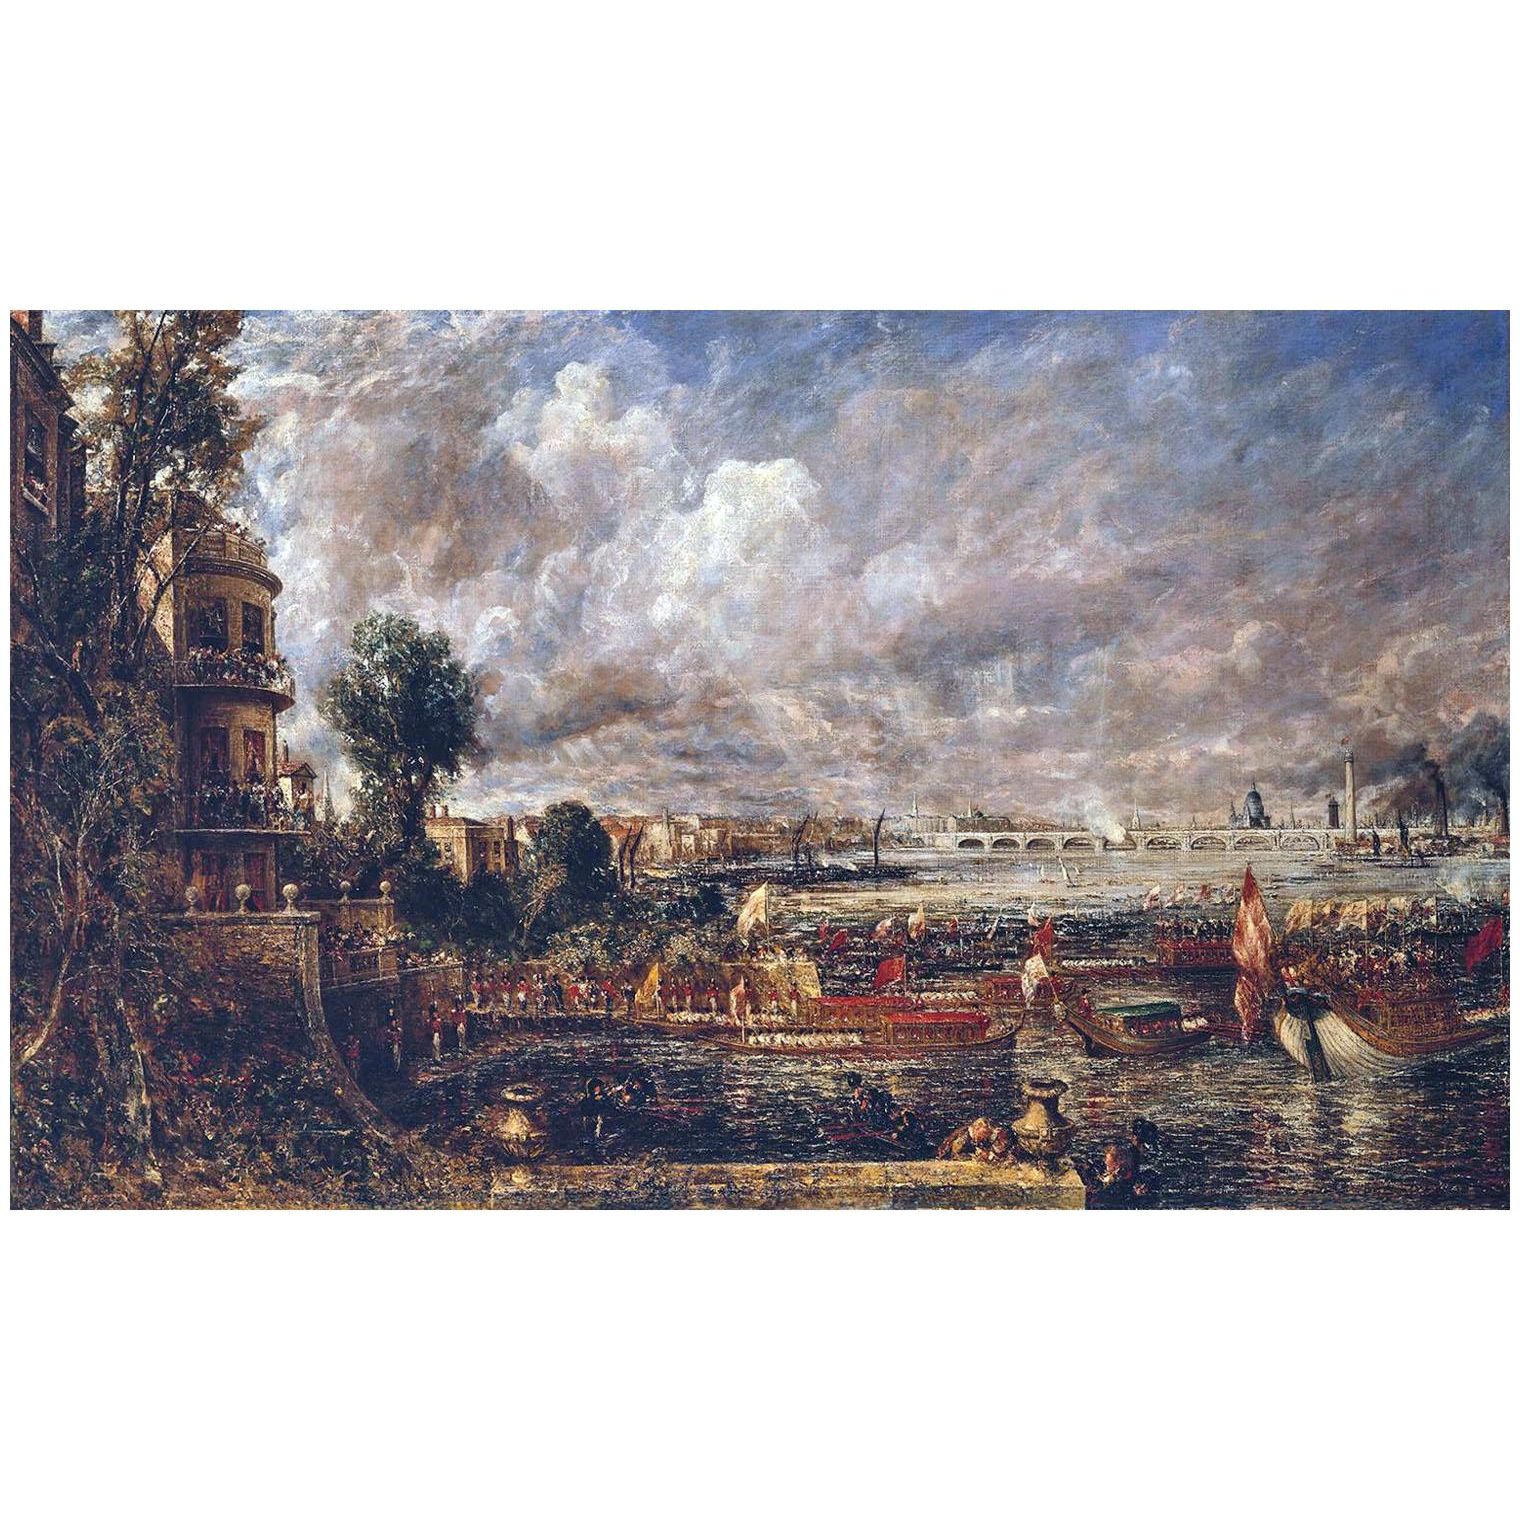 John Constable. The Opening of Waterloo Bridge. 1831. Tate Britain